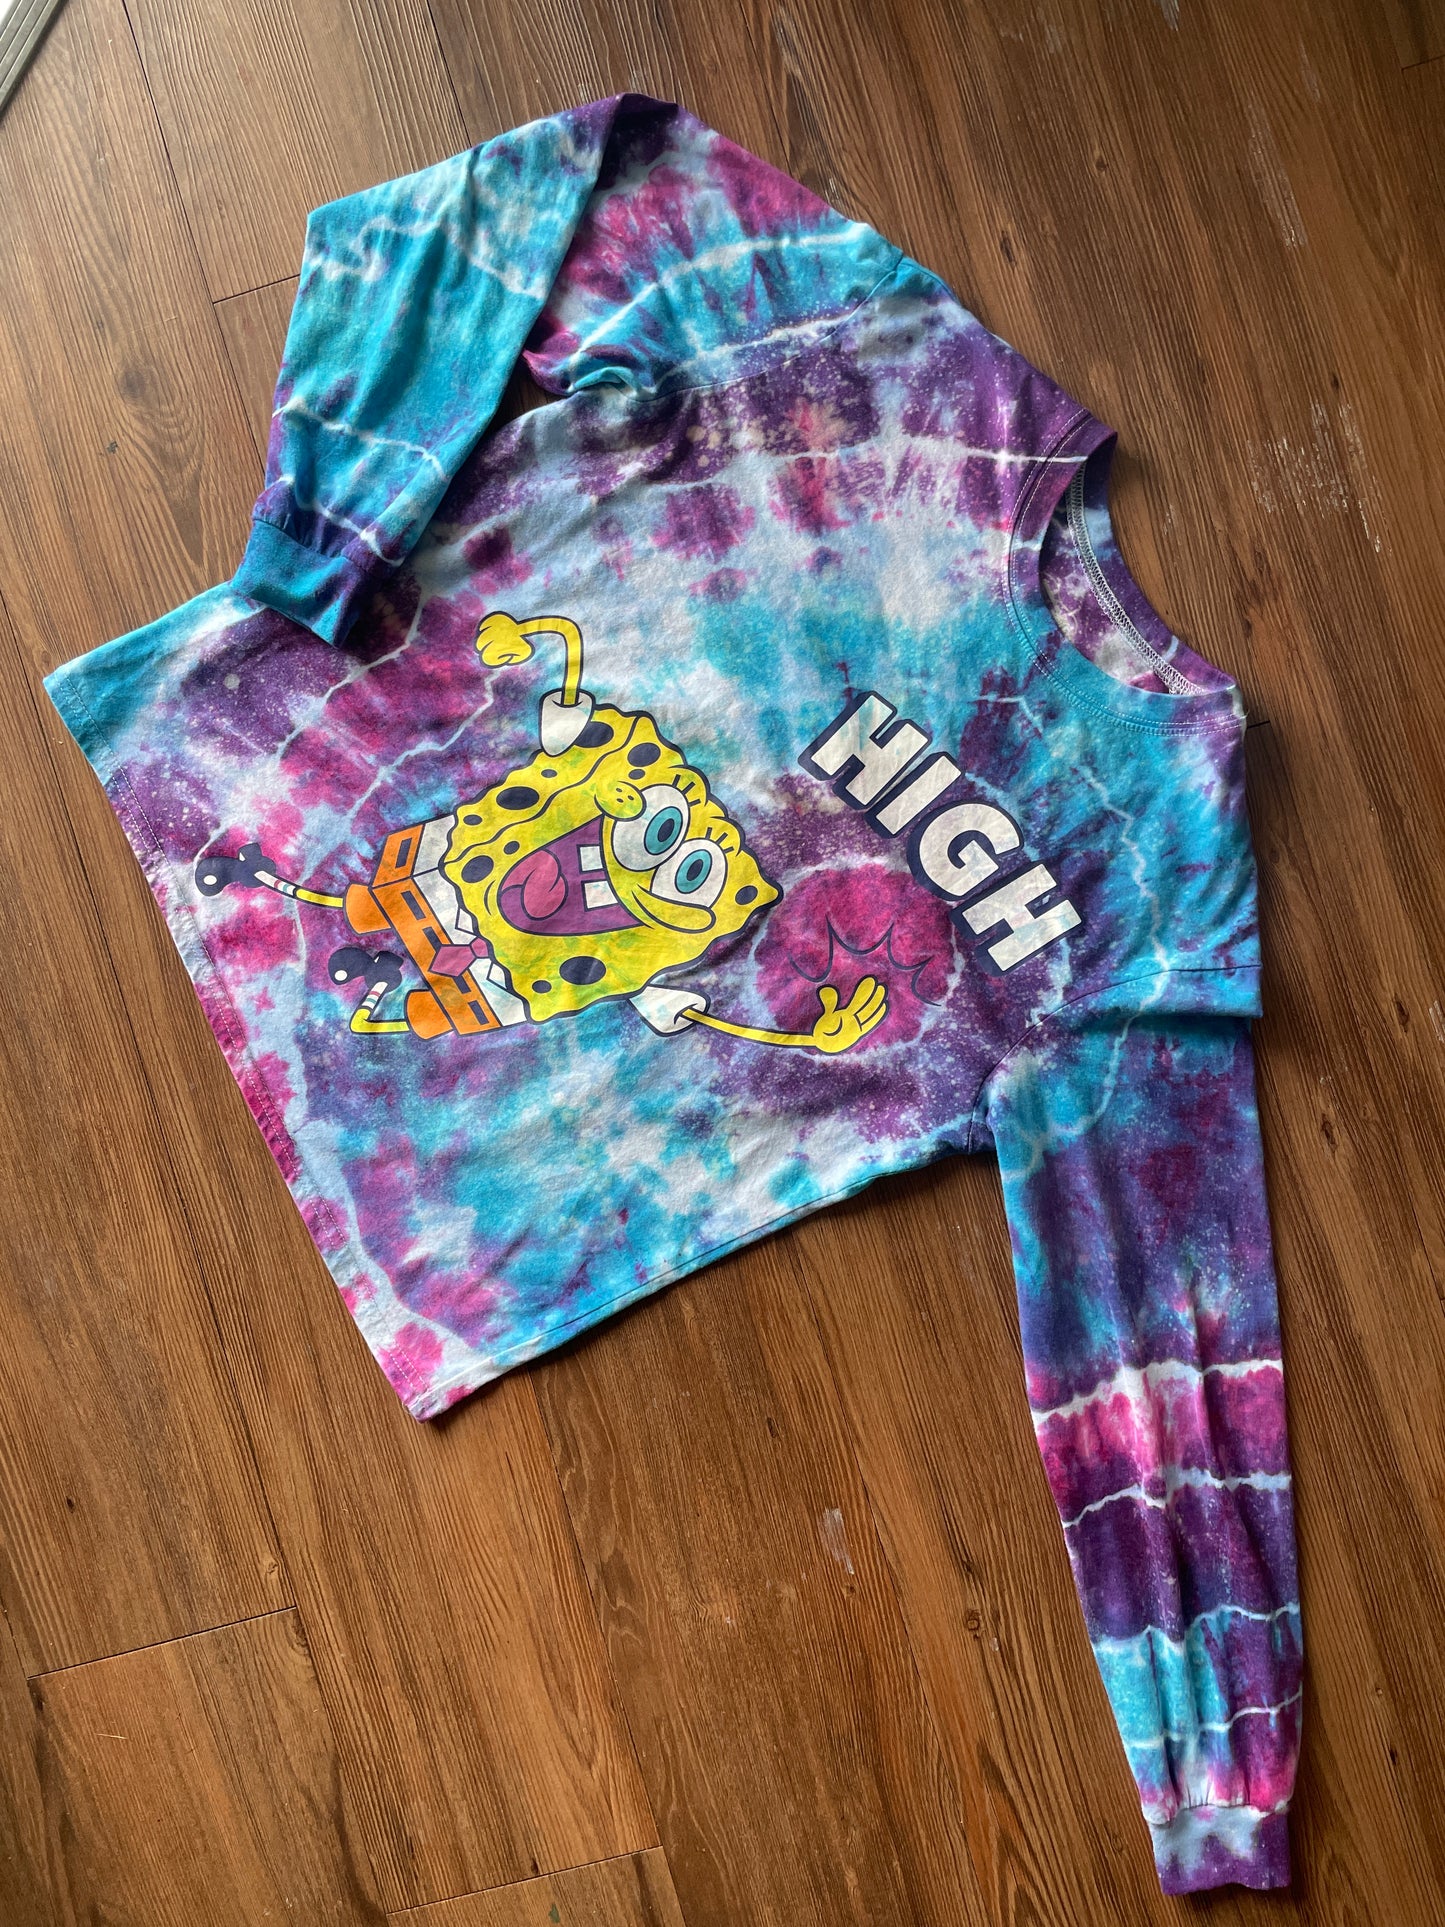 MEDIUM Unisex SpongeBob Squarepants High Five Handmade Galaxy Geode Tie Dye T-Shirt | Blue, Purple, and Pink Long Sleeve Tee